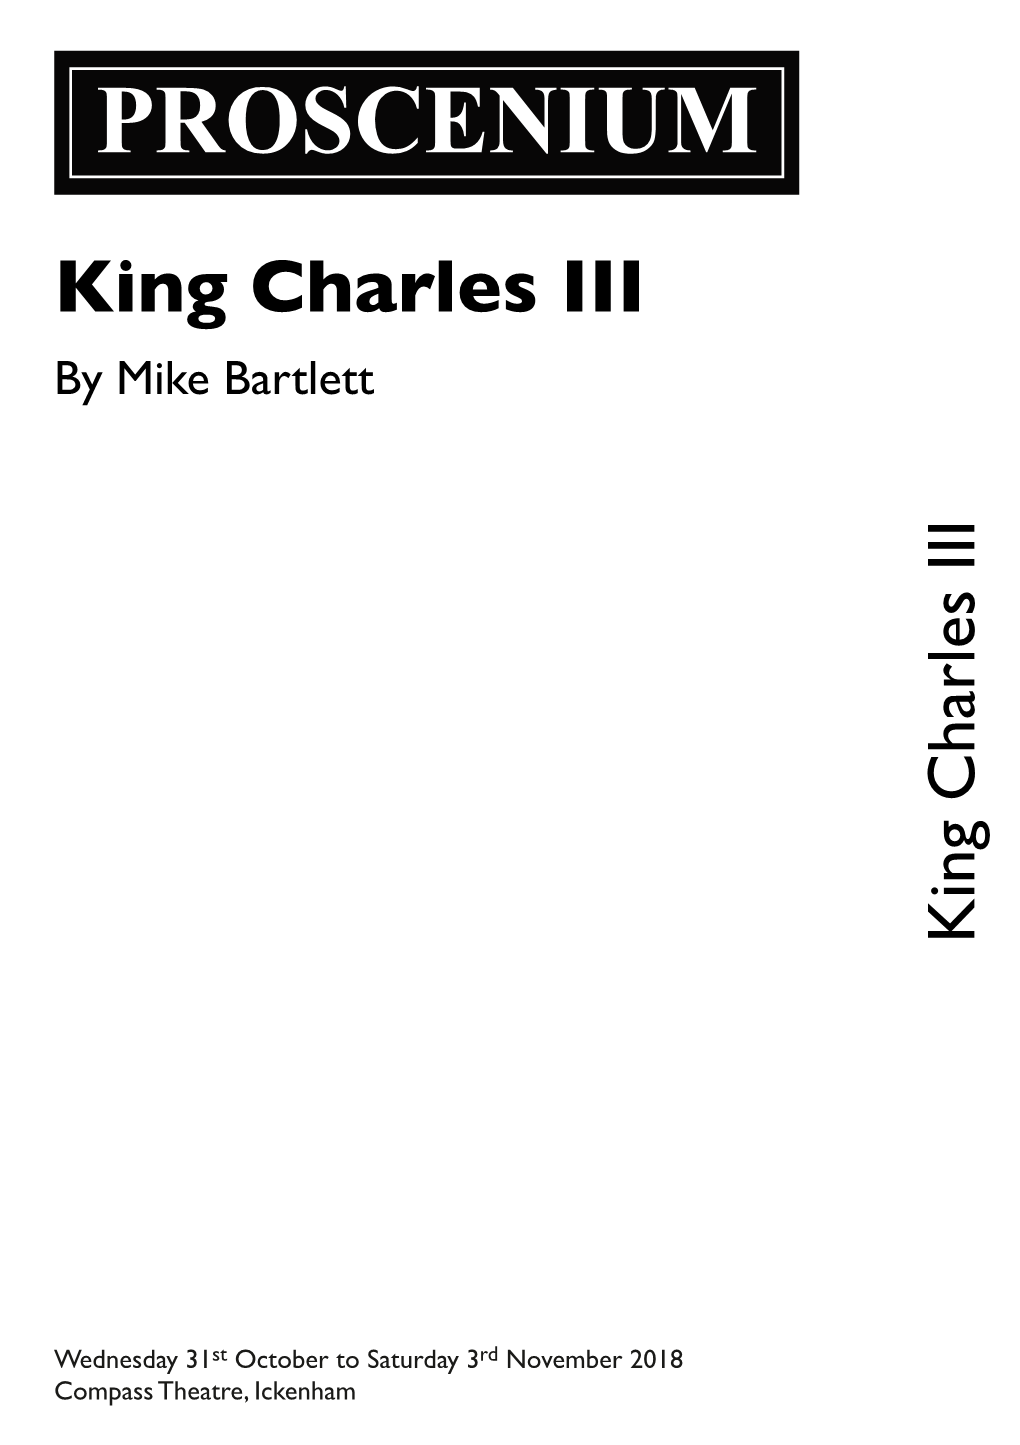 King Charles III King Charles III the Cast King Charles III